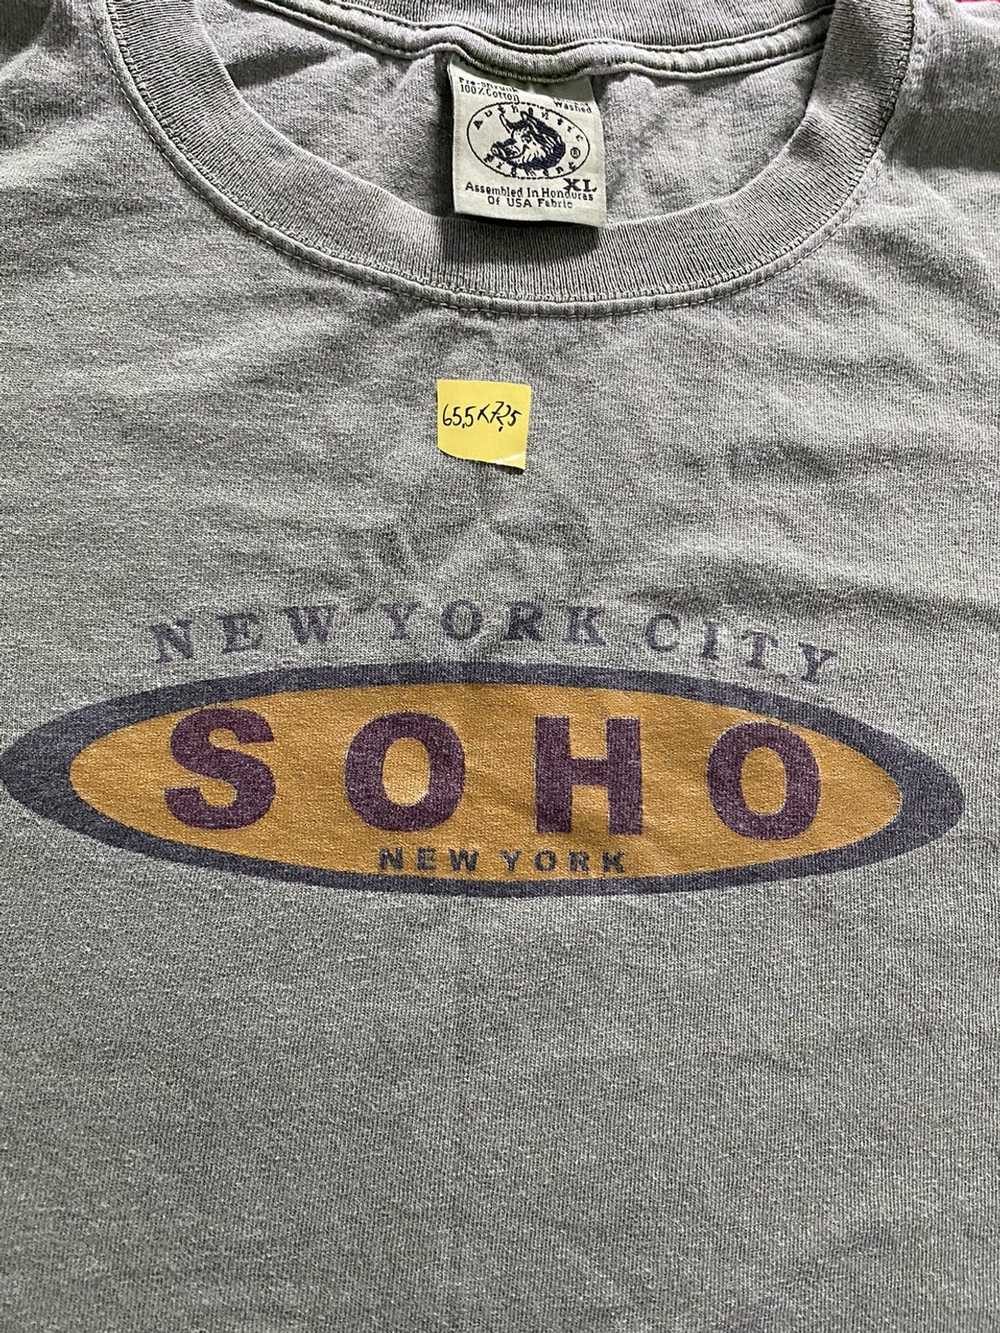 New York × Vintage Soho New York City USA c tee T… - image 2